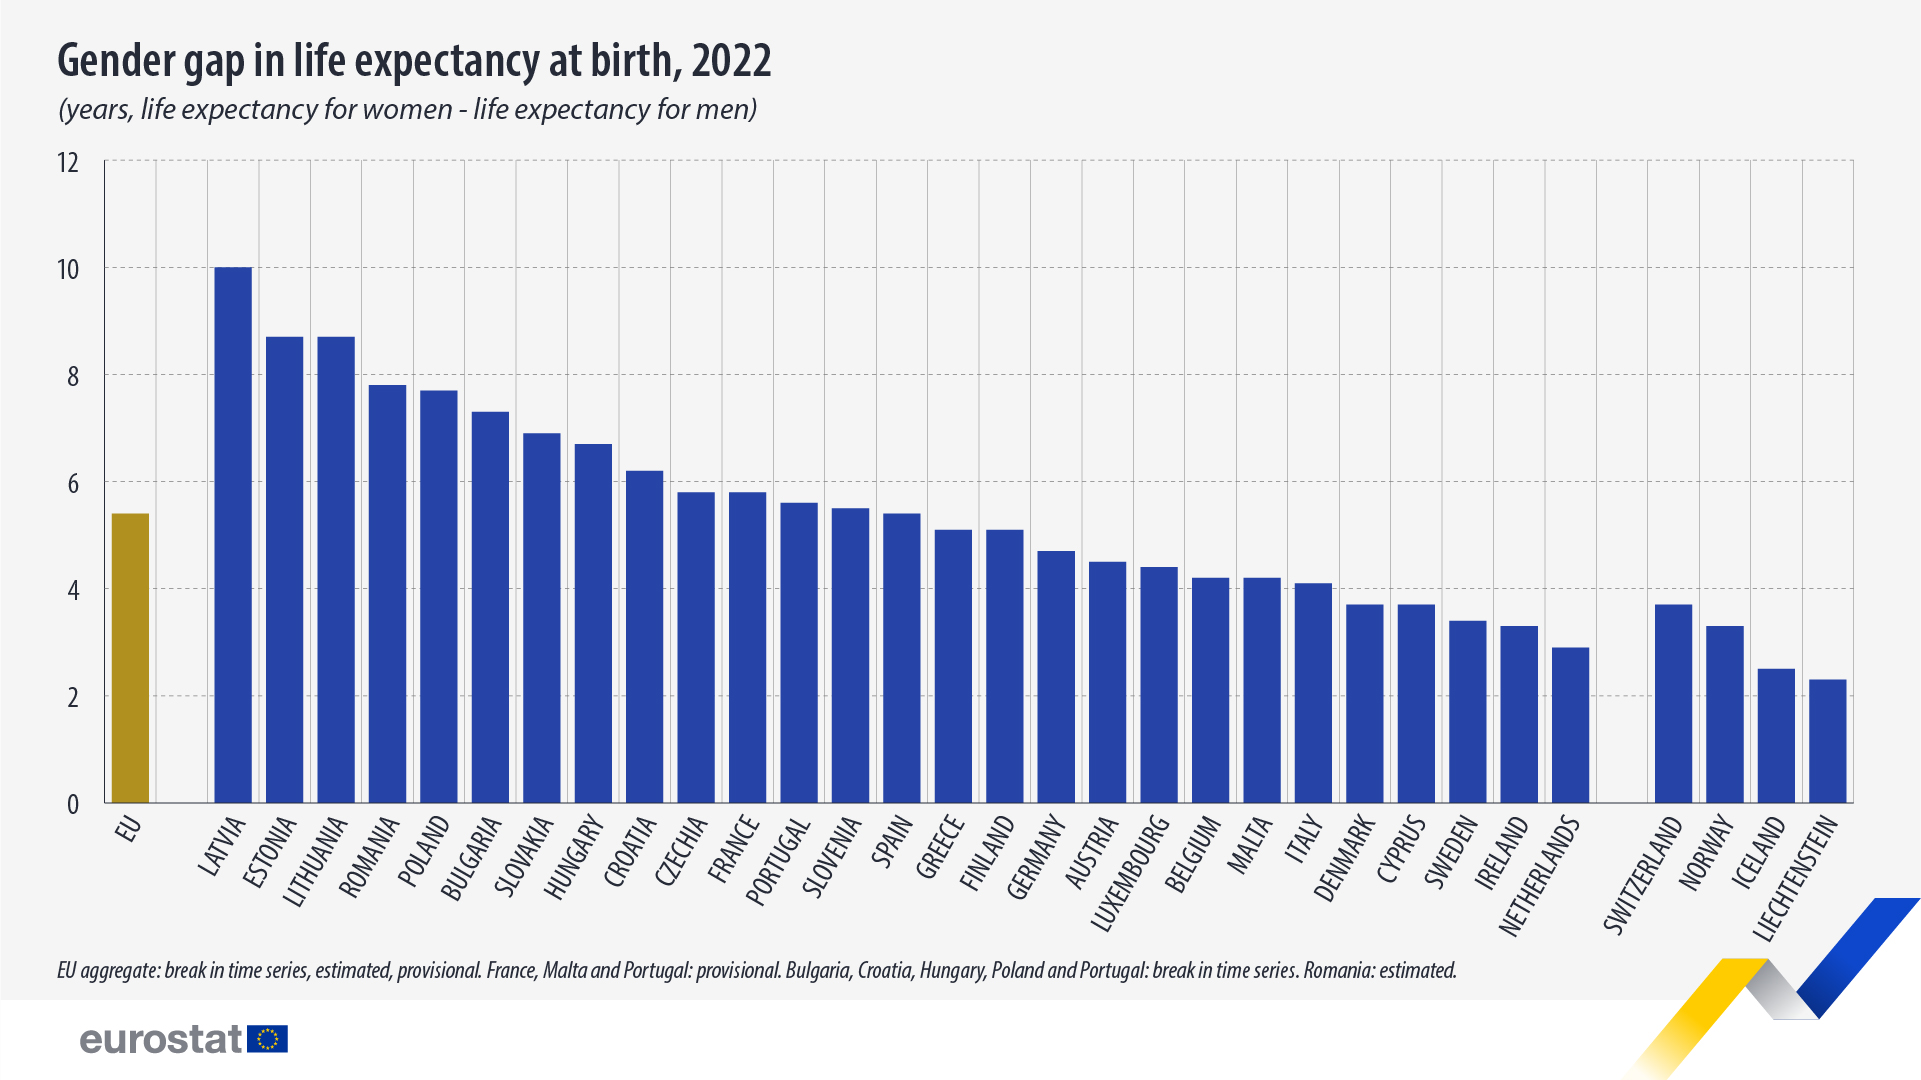 https://ec.europa.eu/eurostat/documents/4187653/18051216/gender-gap-life-expectancy-at-birth-2022.jpg/db21cb7a-3bb4-a8f8-e678-eab5a40b070c?t=1710406502574